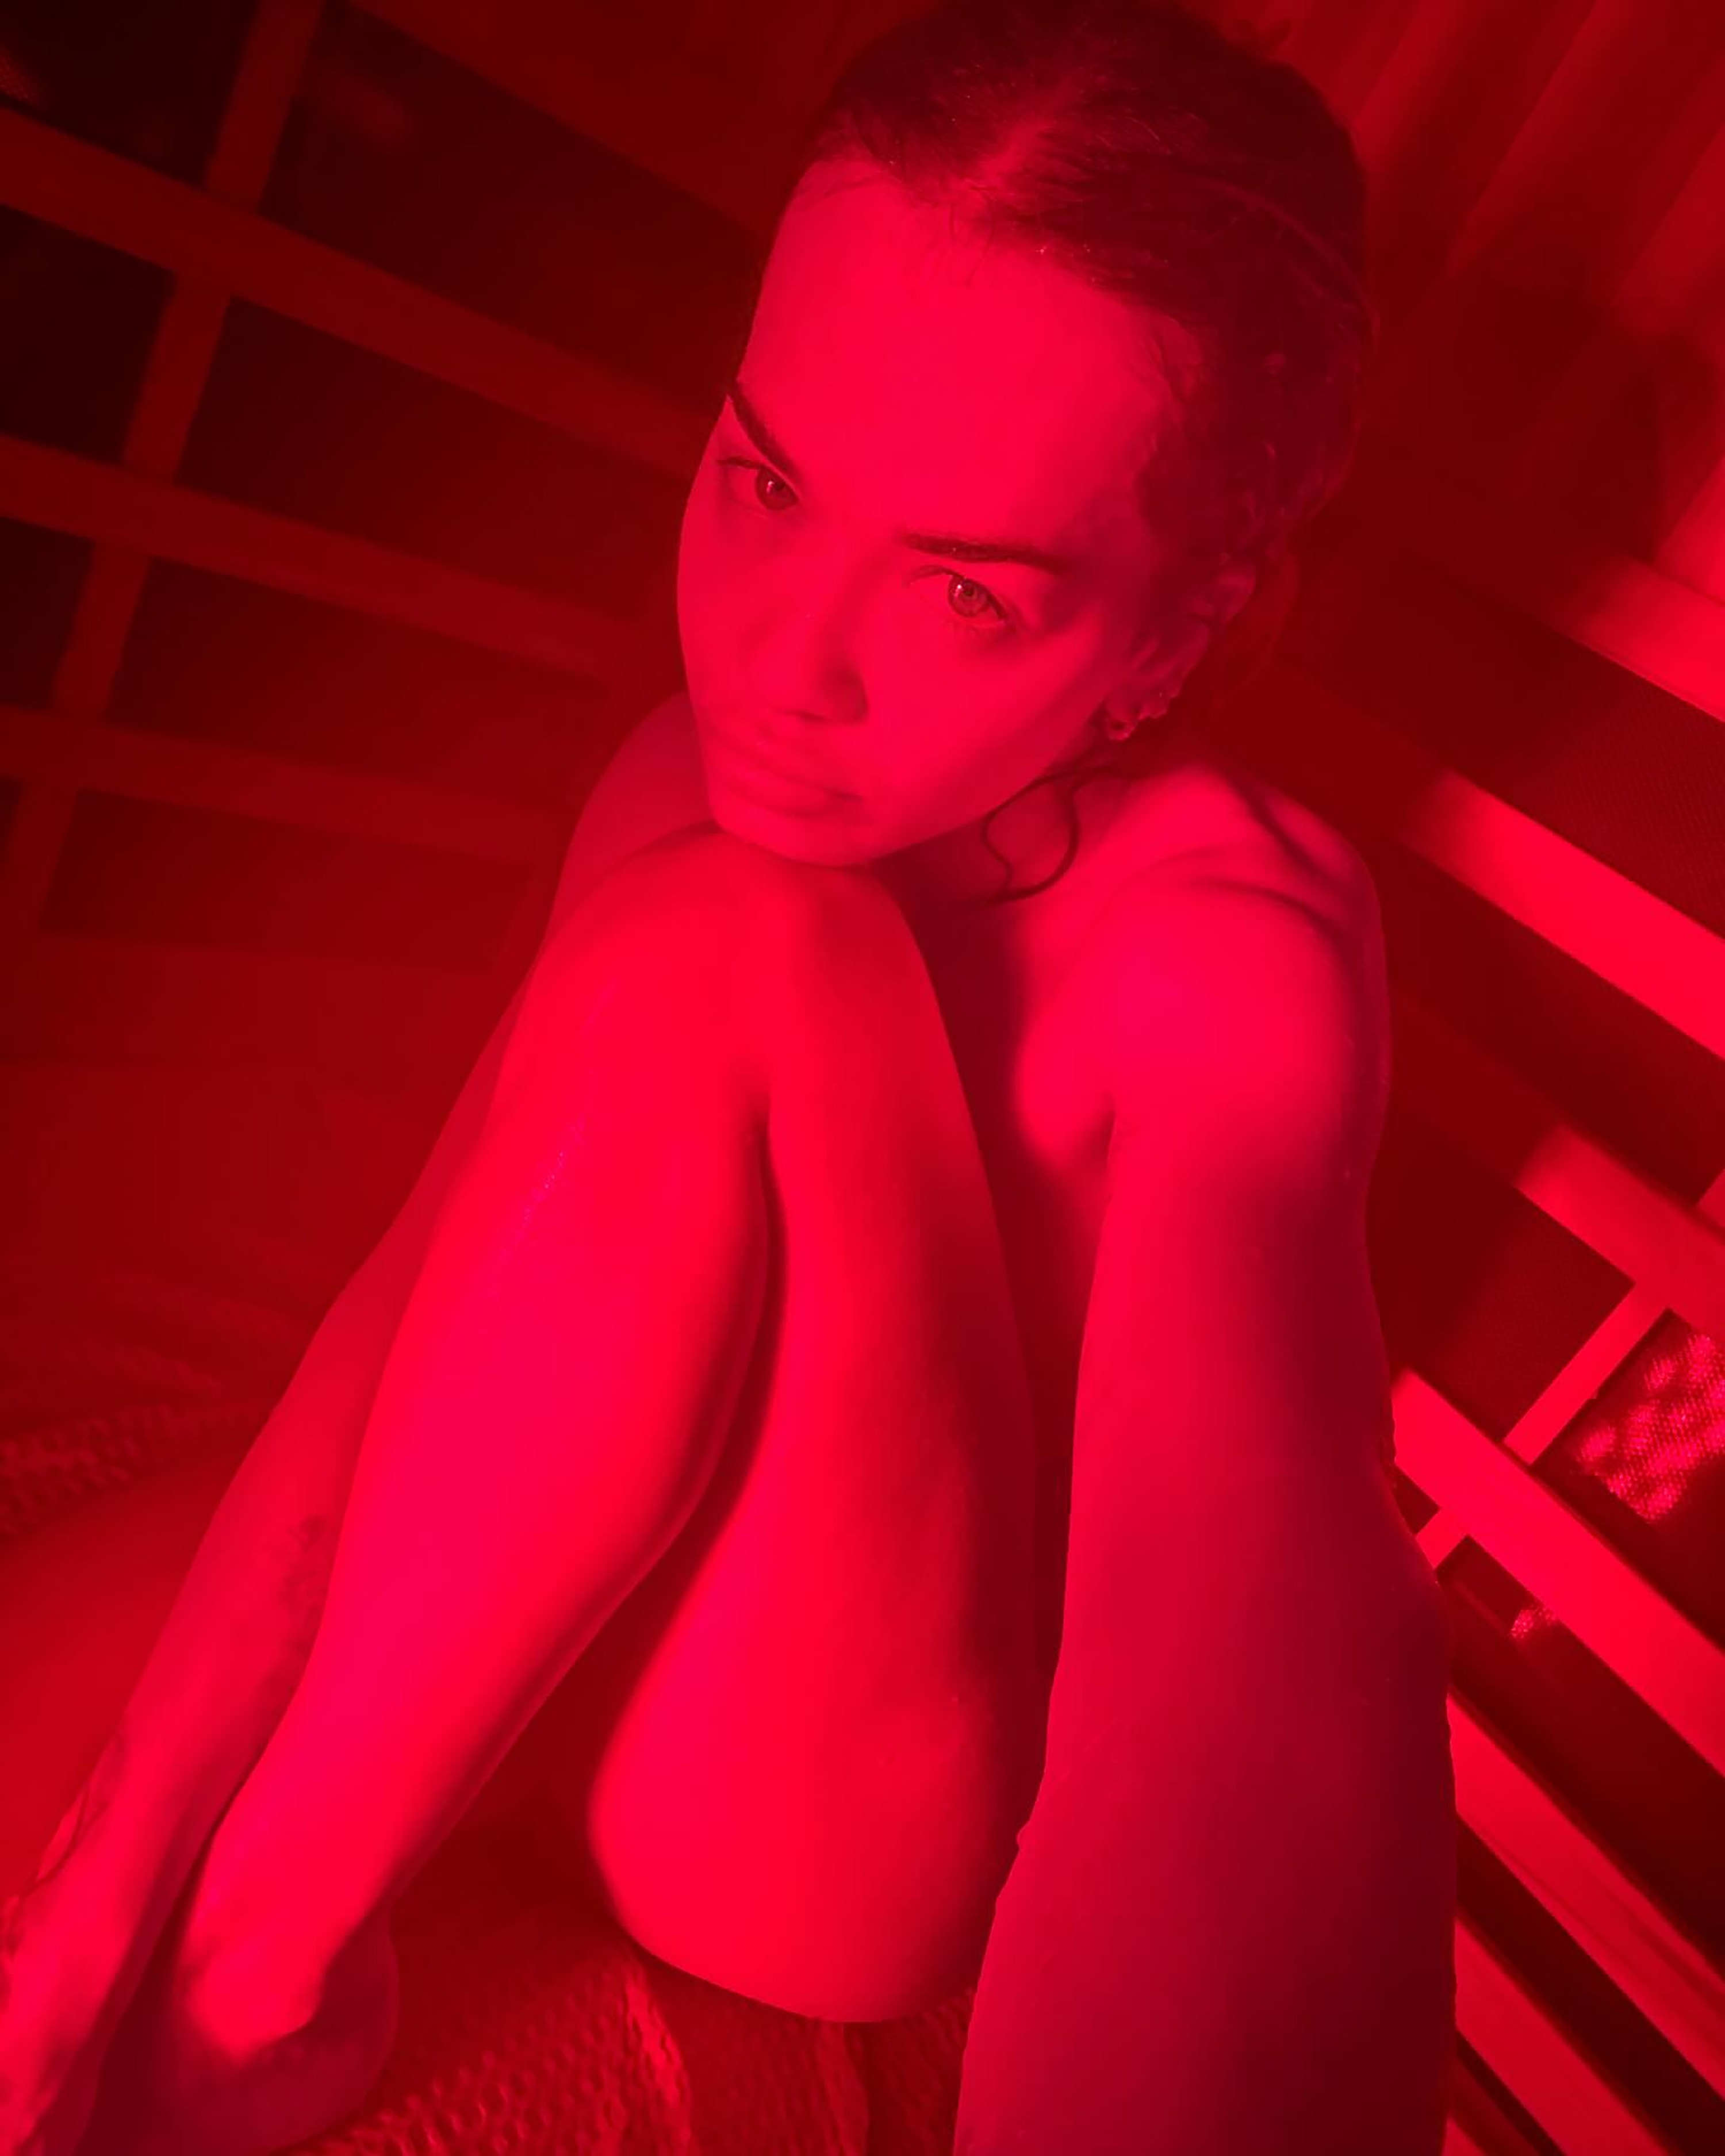 Rita Ora shared a fully naked sauna selfie on Instagram